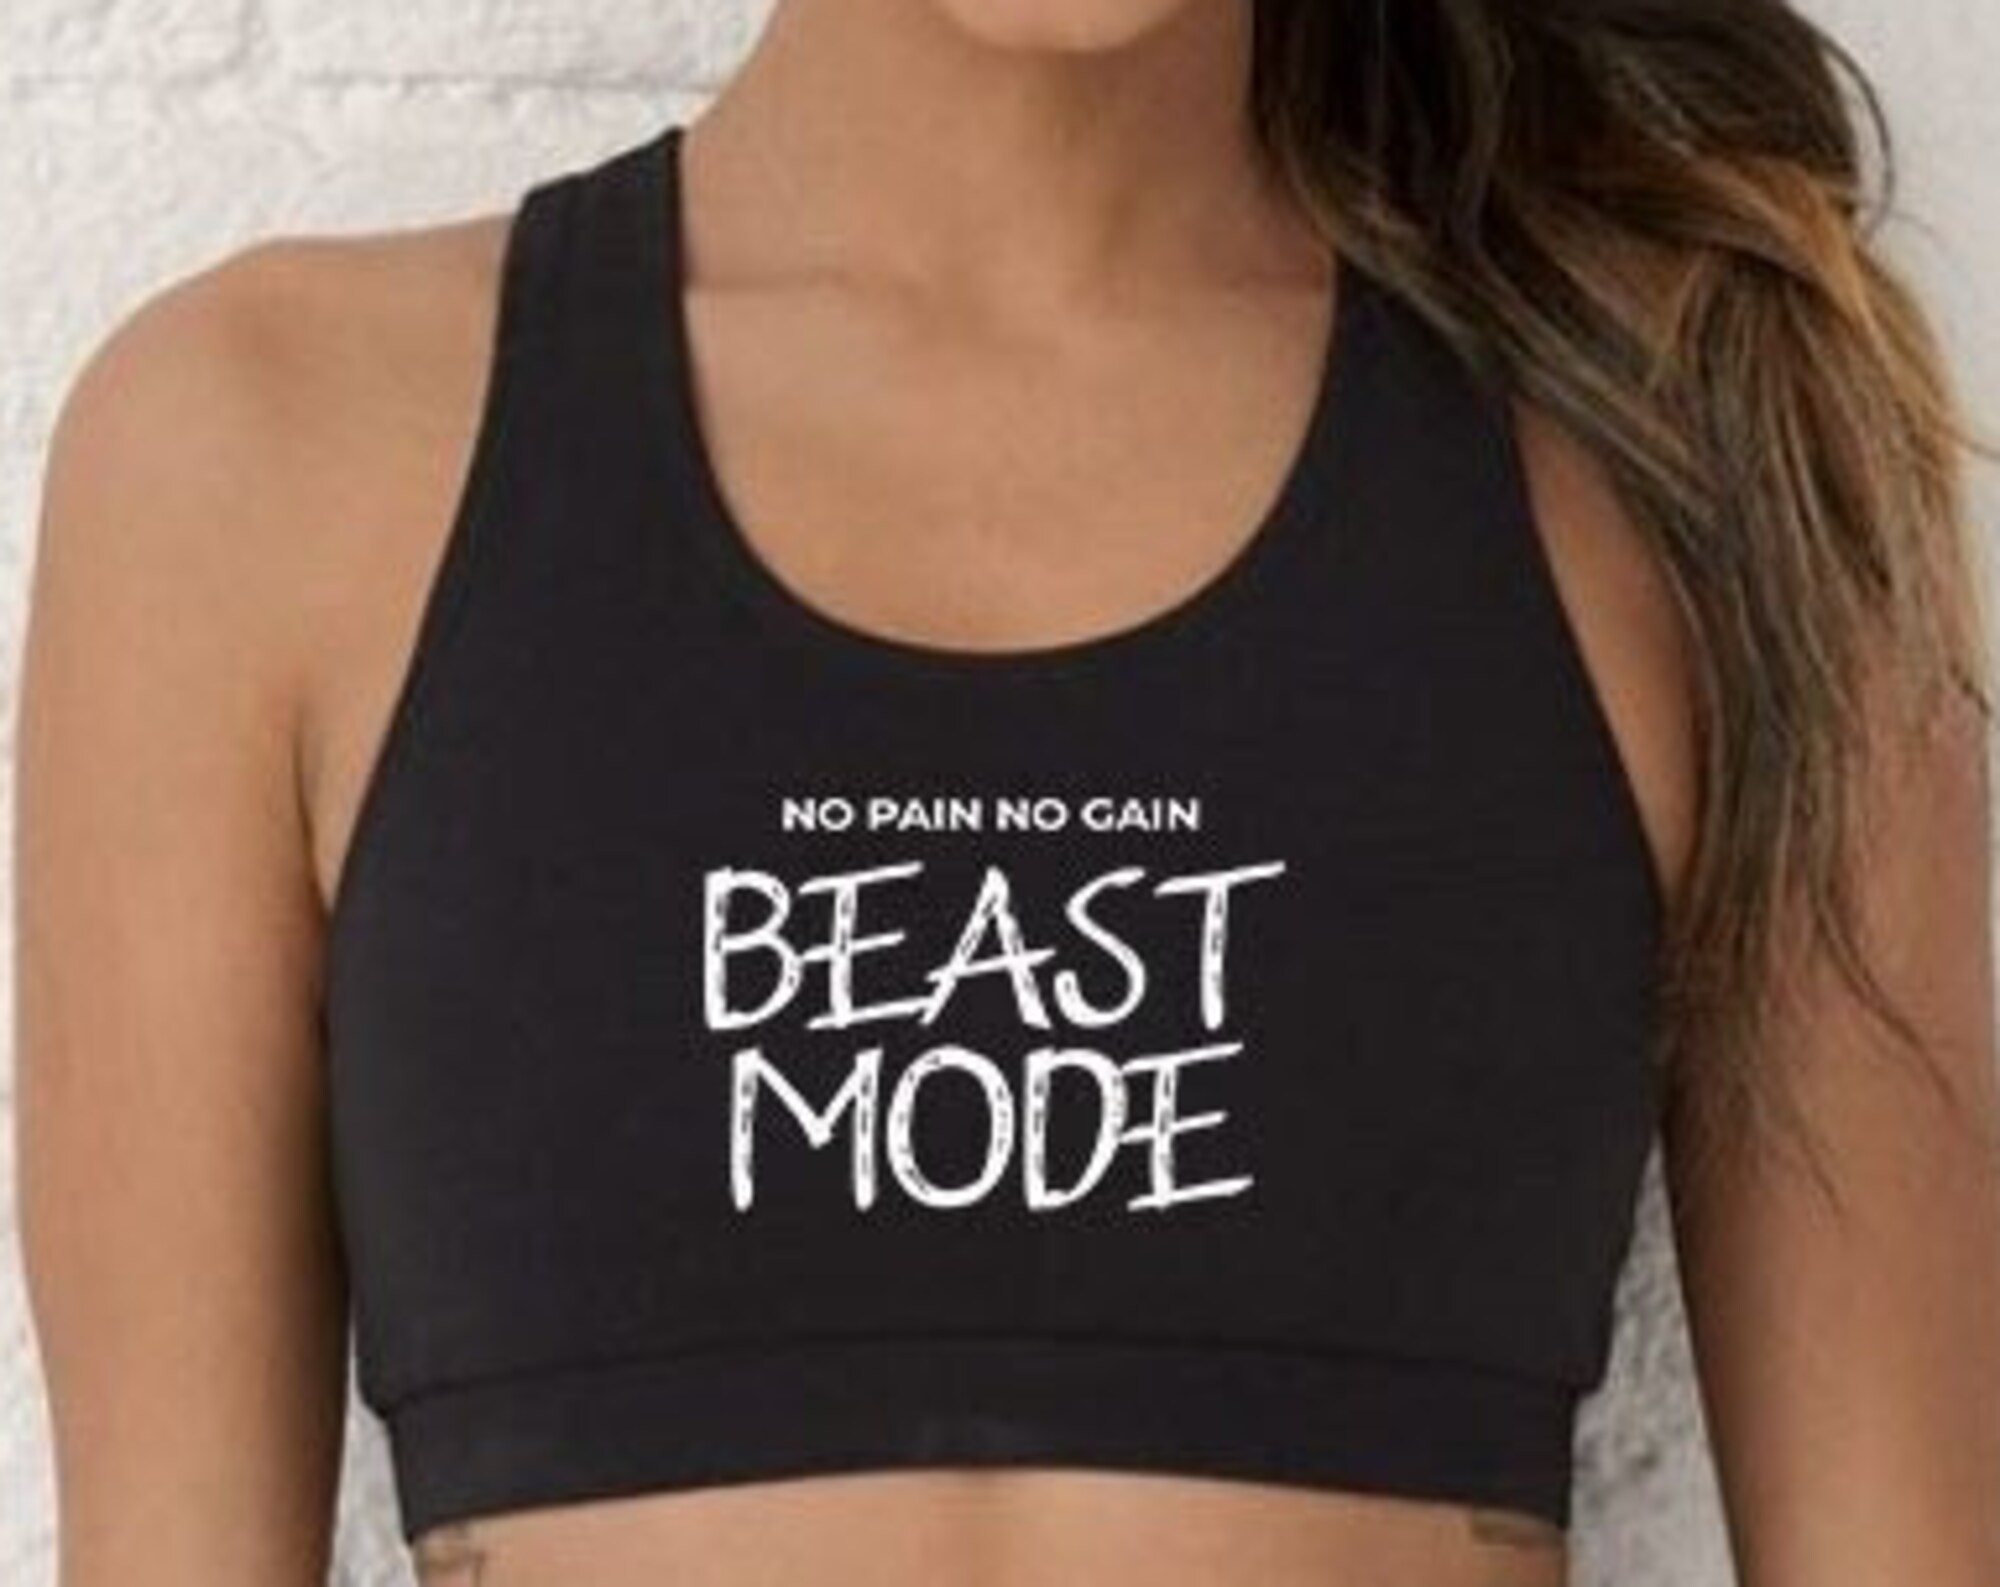 Beast Mode sports bra - Lifting bra- Body bulding Apparel - Workout Outfit Sport bra